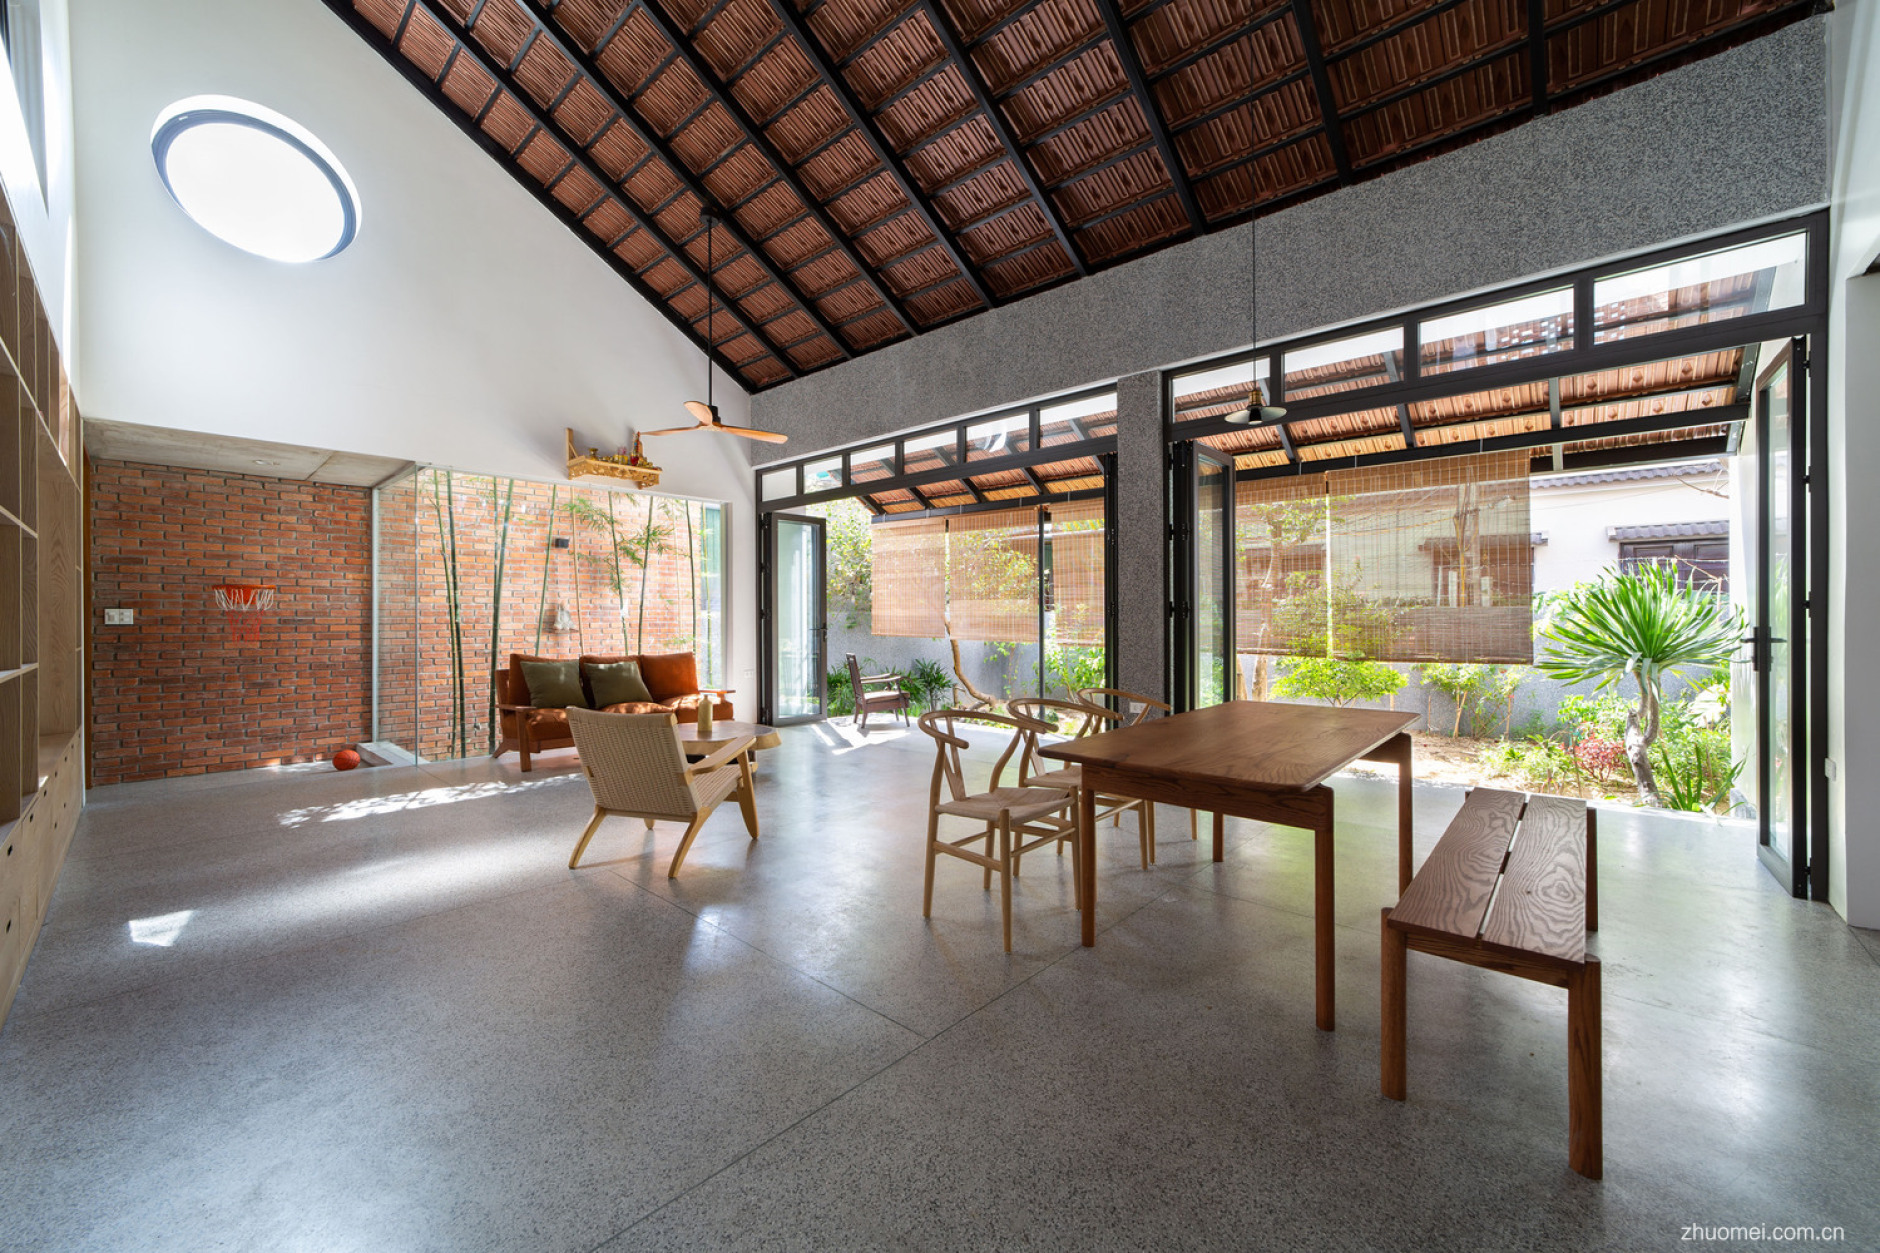 Dom Architect Studio丨The Tiamo House丨越南-50